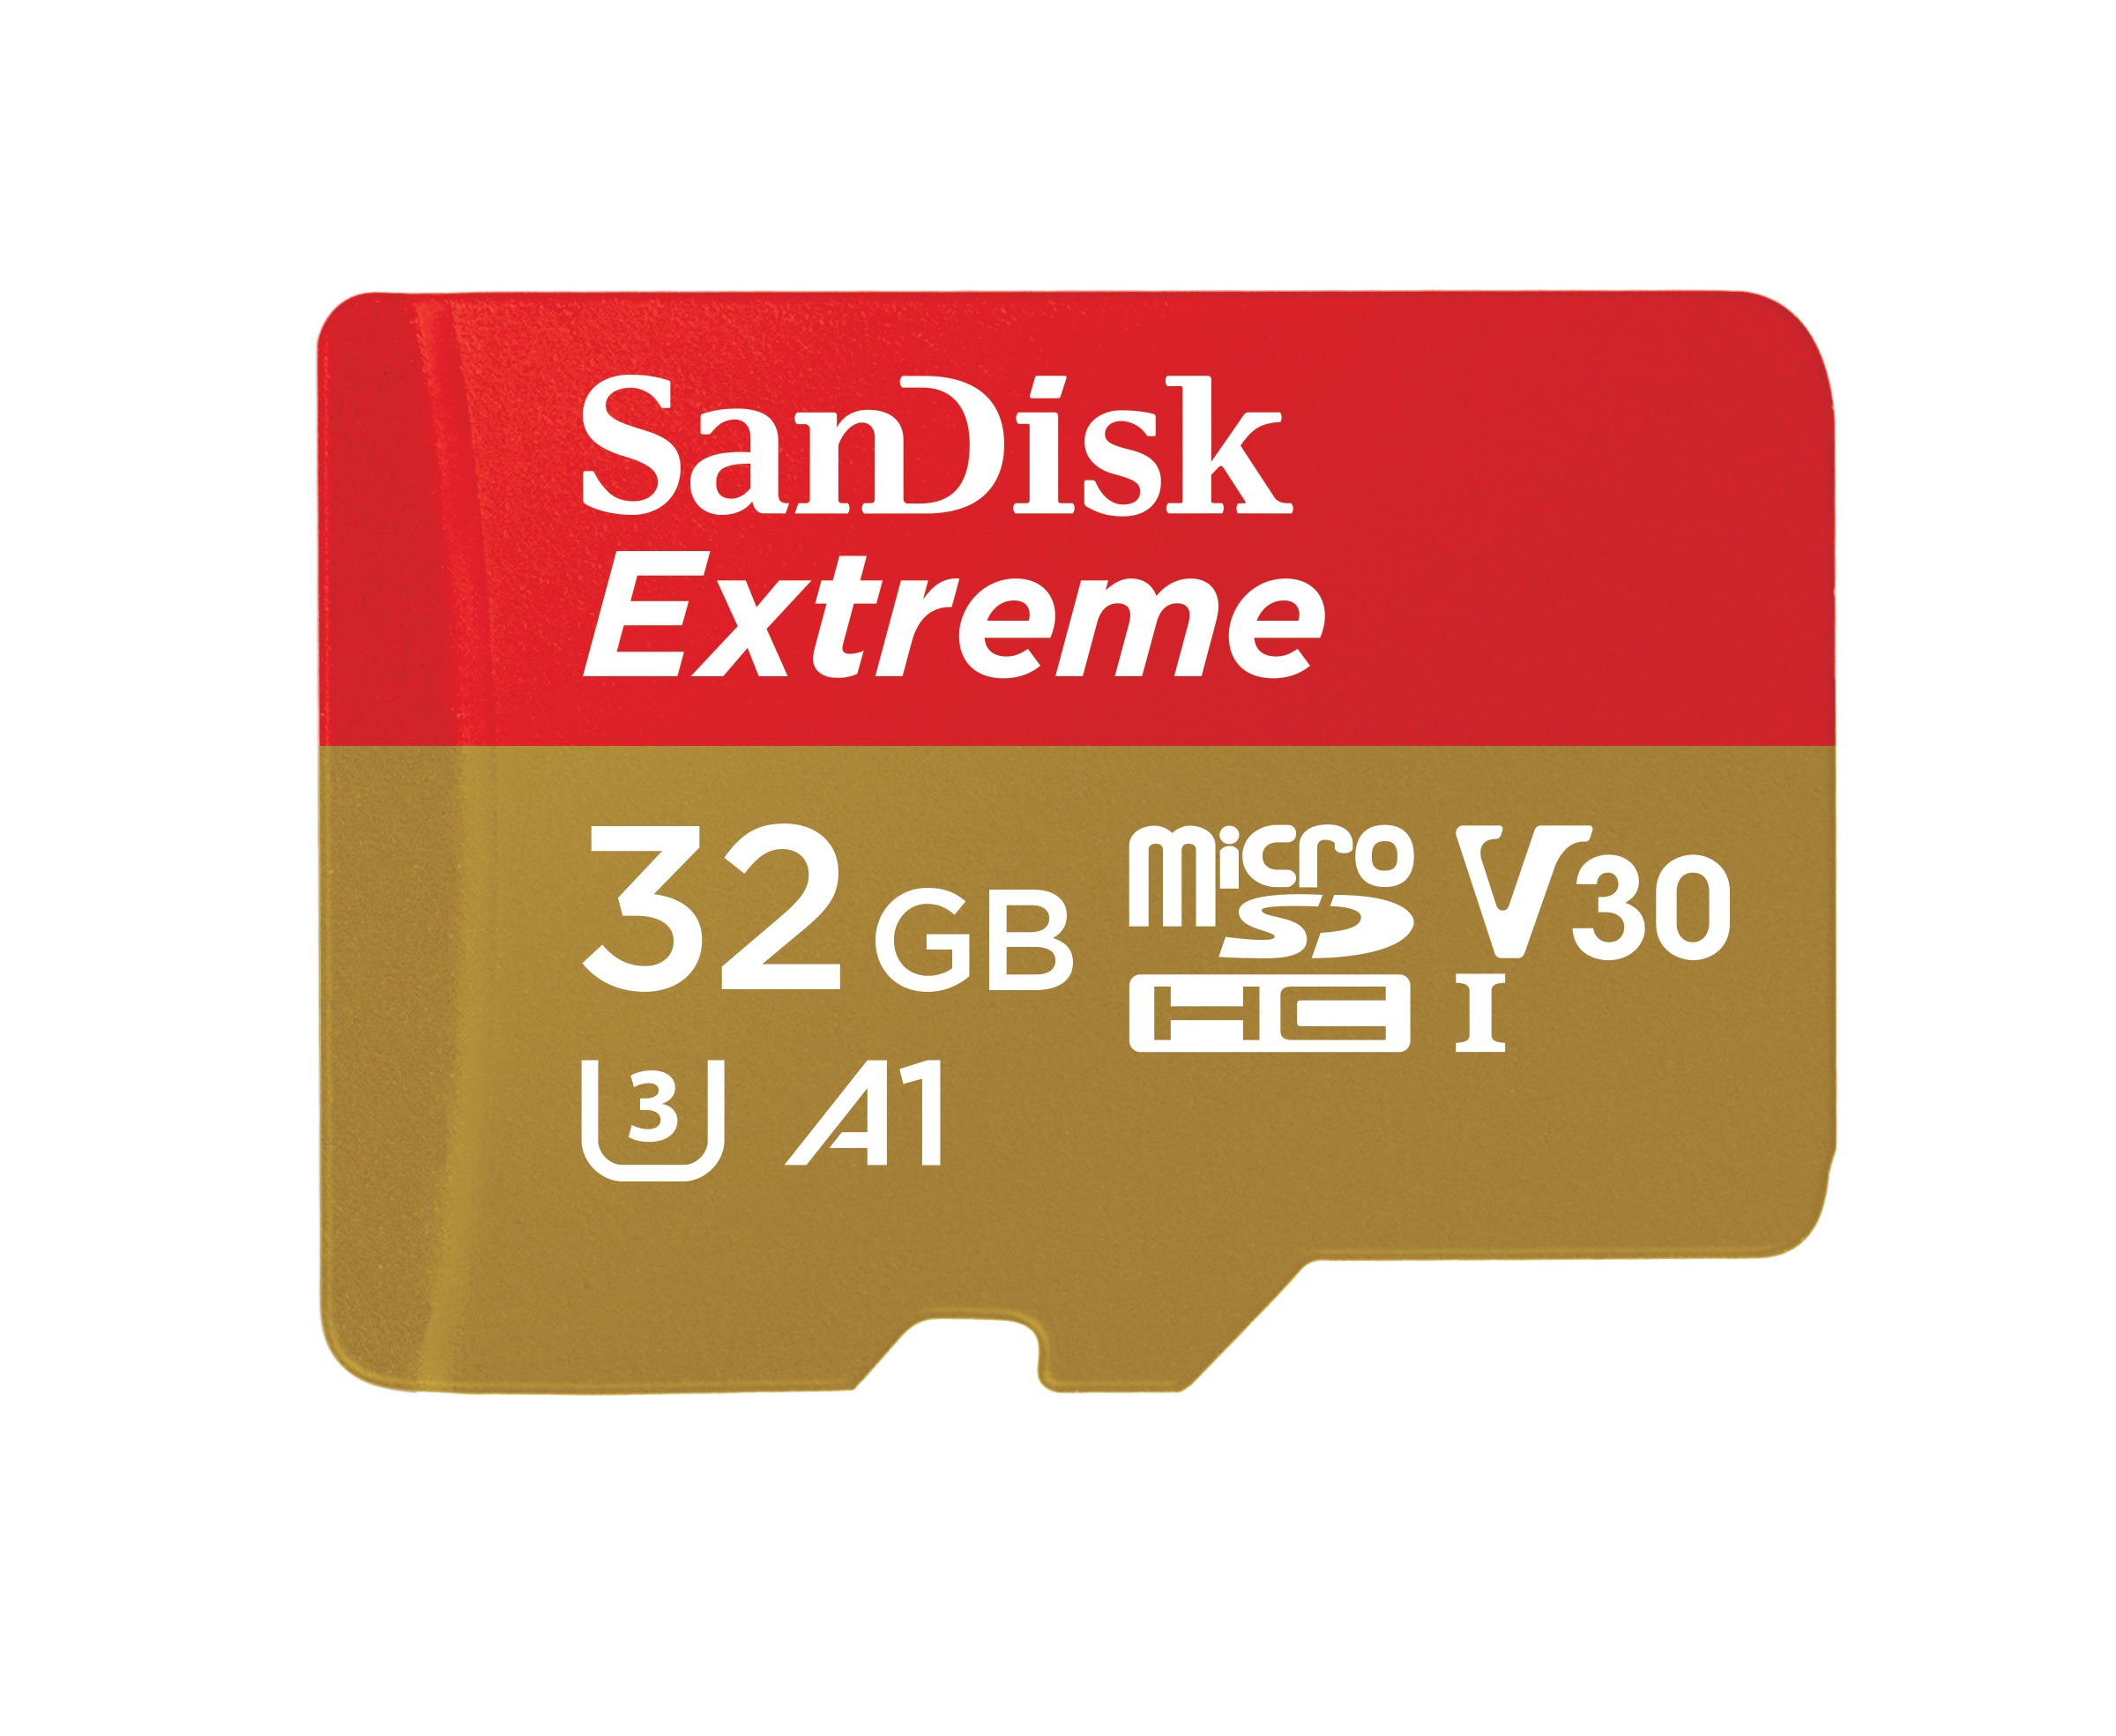 Sandisk Extreme 32GB MicroSDHC UHS-I Klasse 10 flashgeheugen